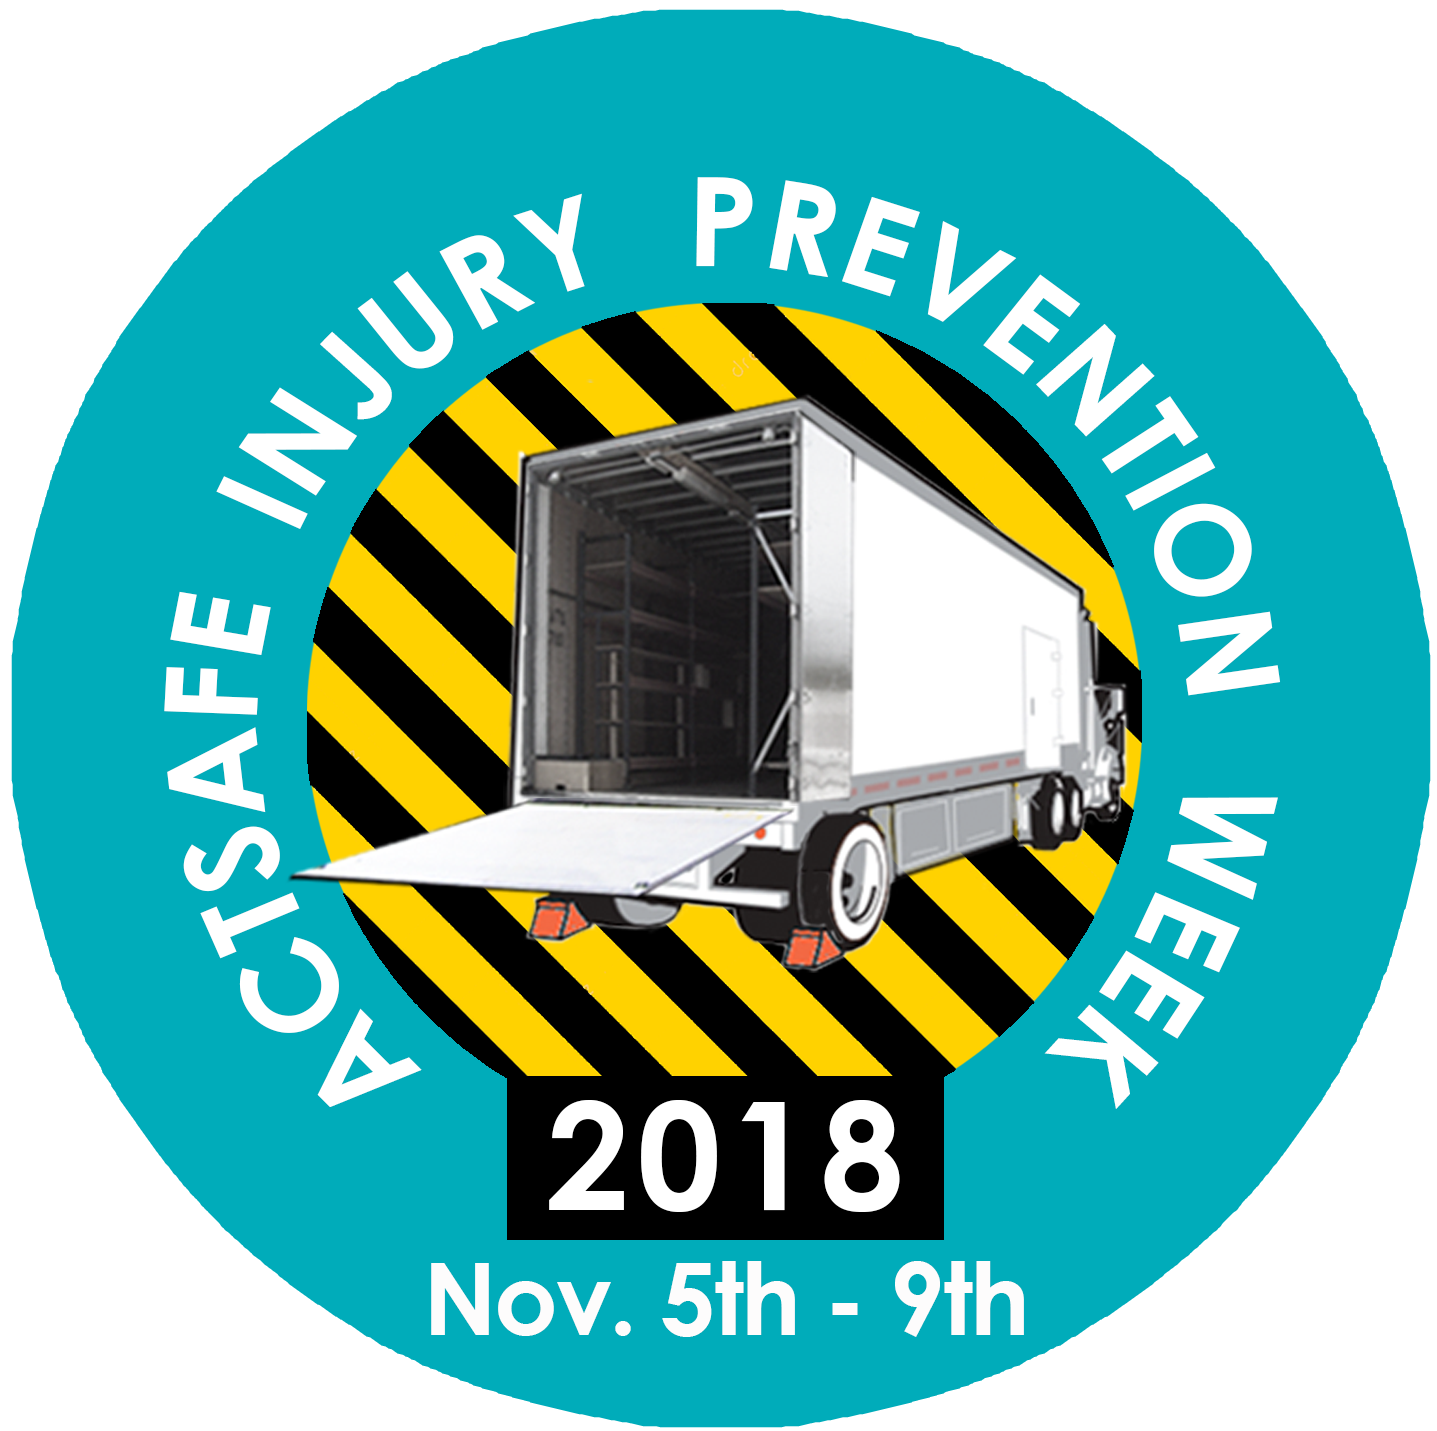 actsafe injury prevention week 2018 logo